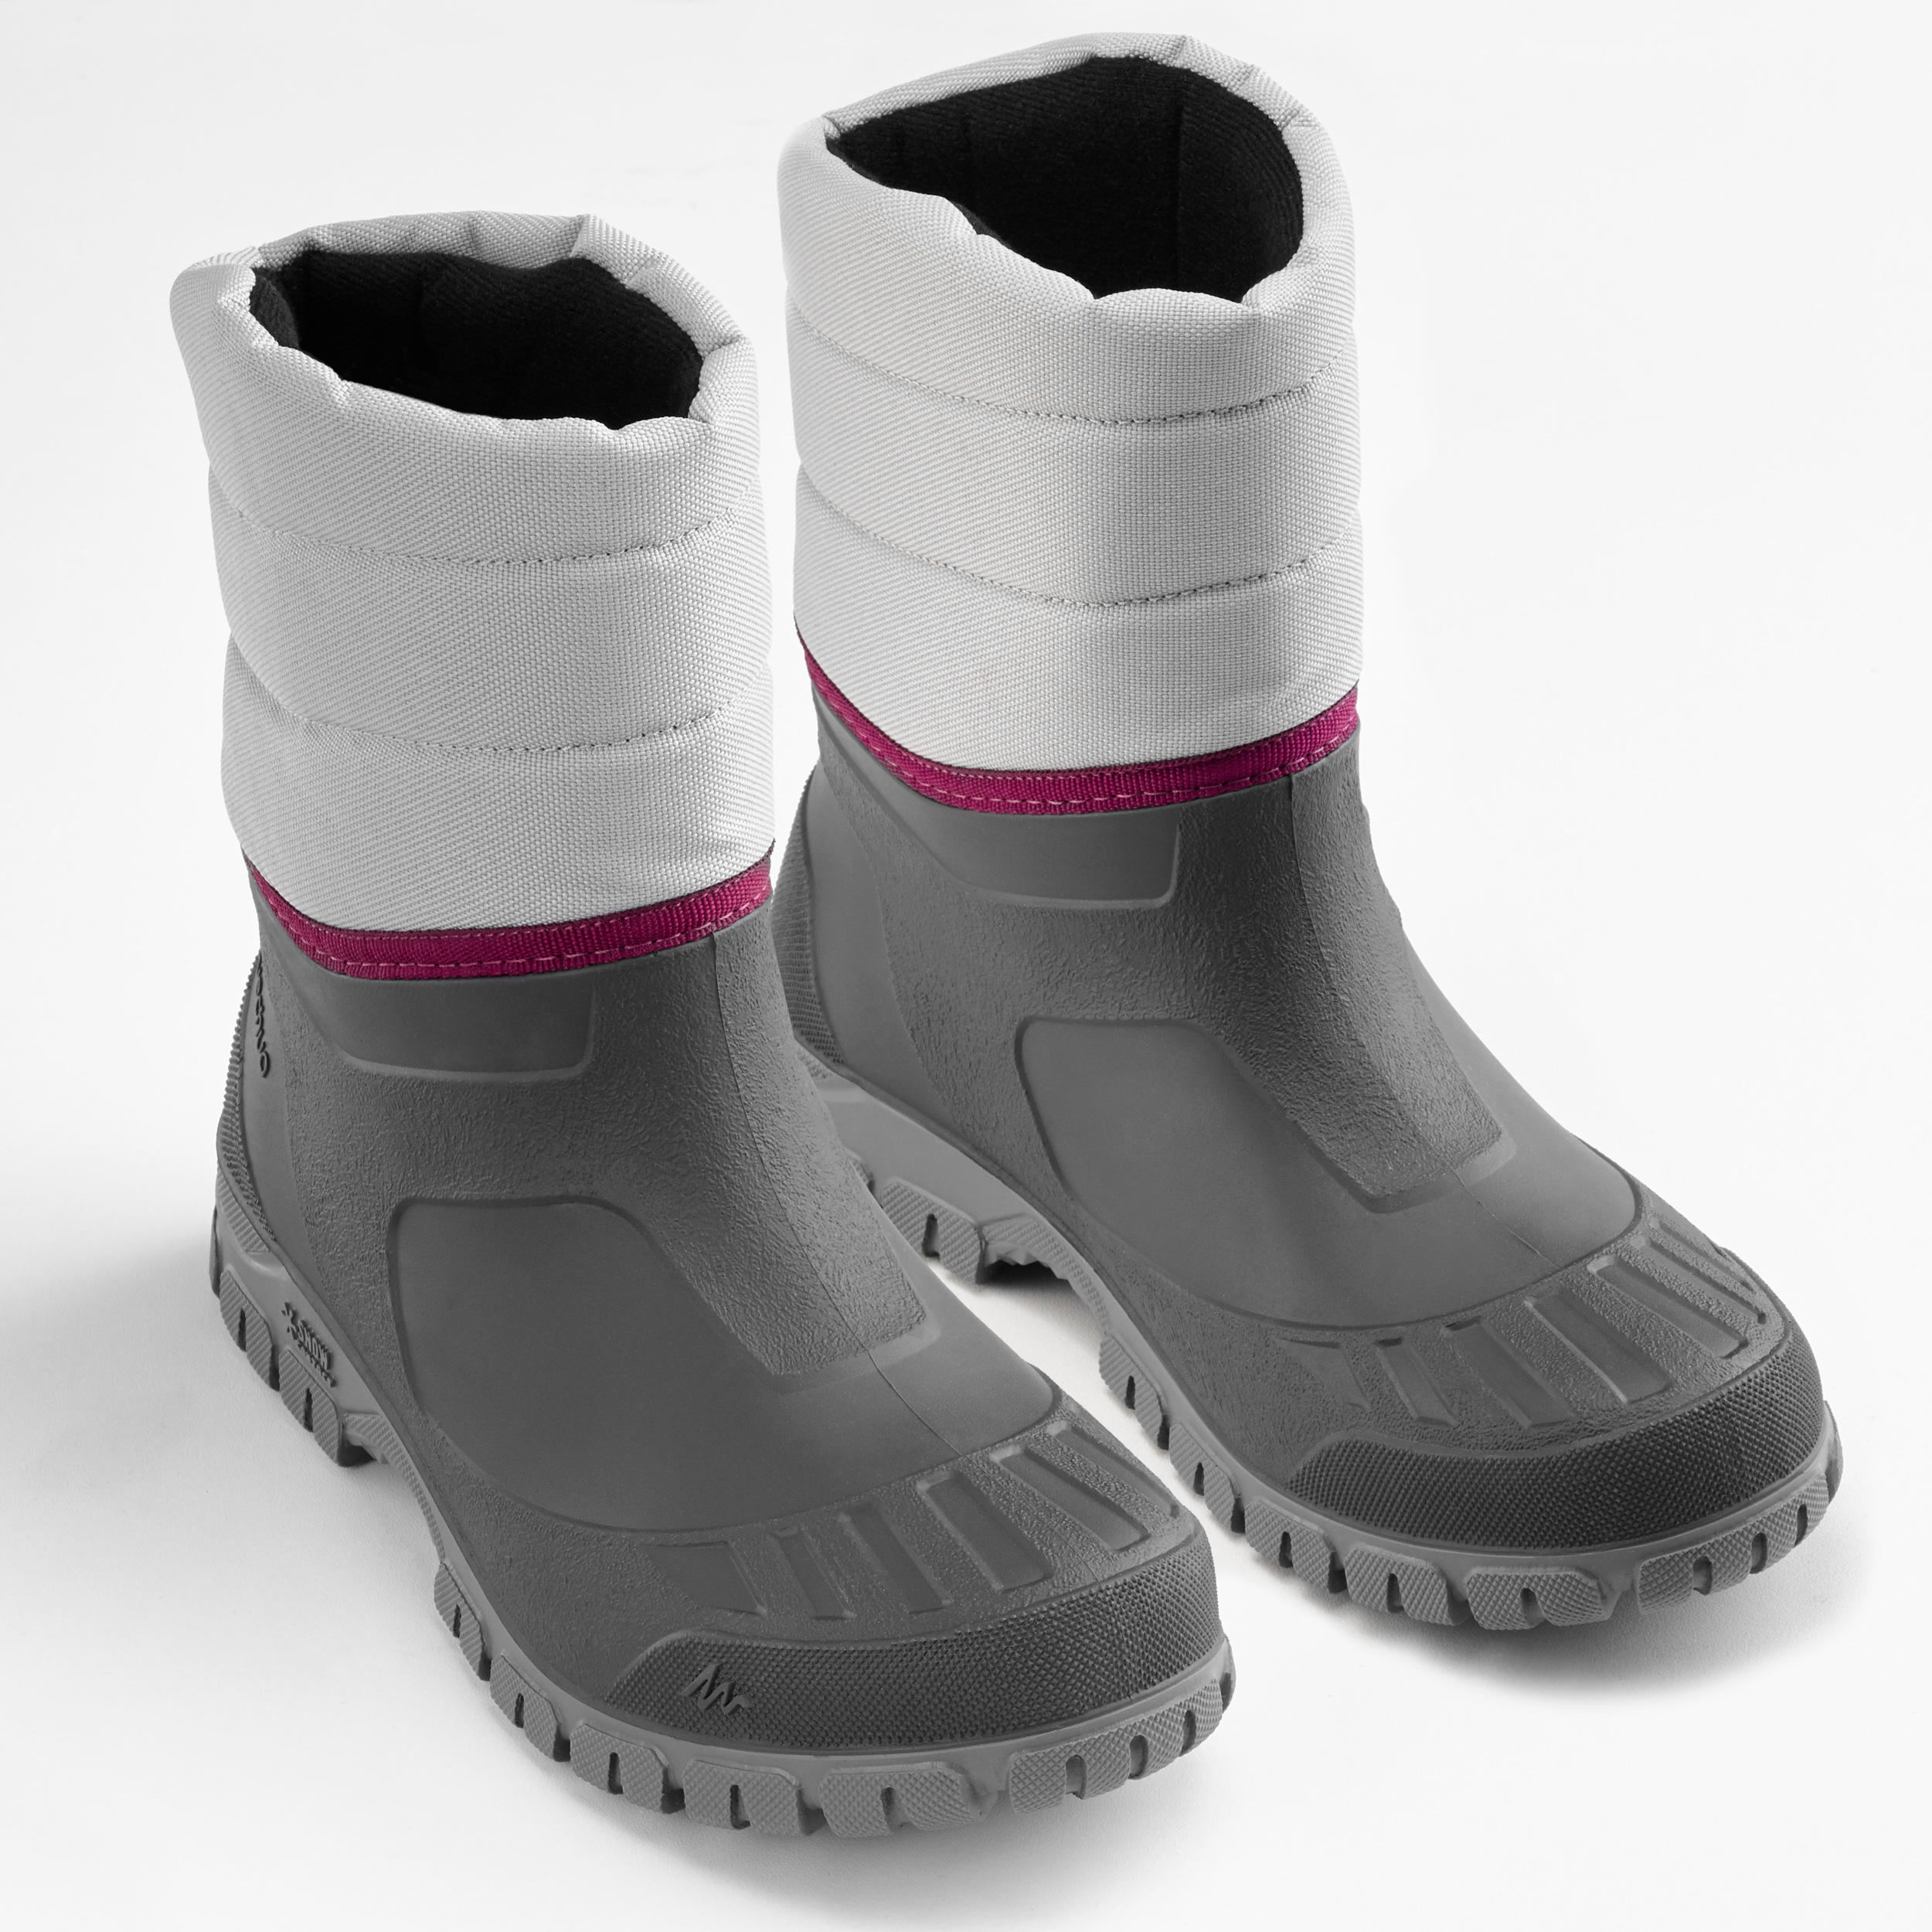 Women's warm waterproof snow hiking boots  - SH100 mid 2/5